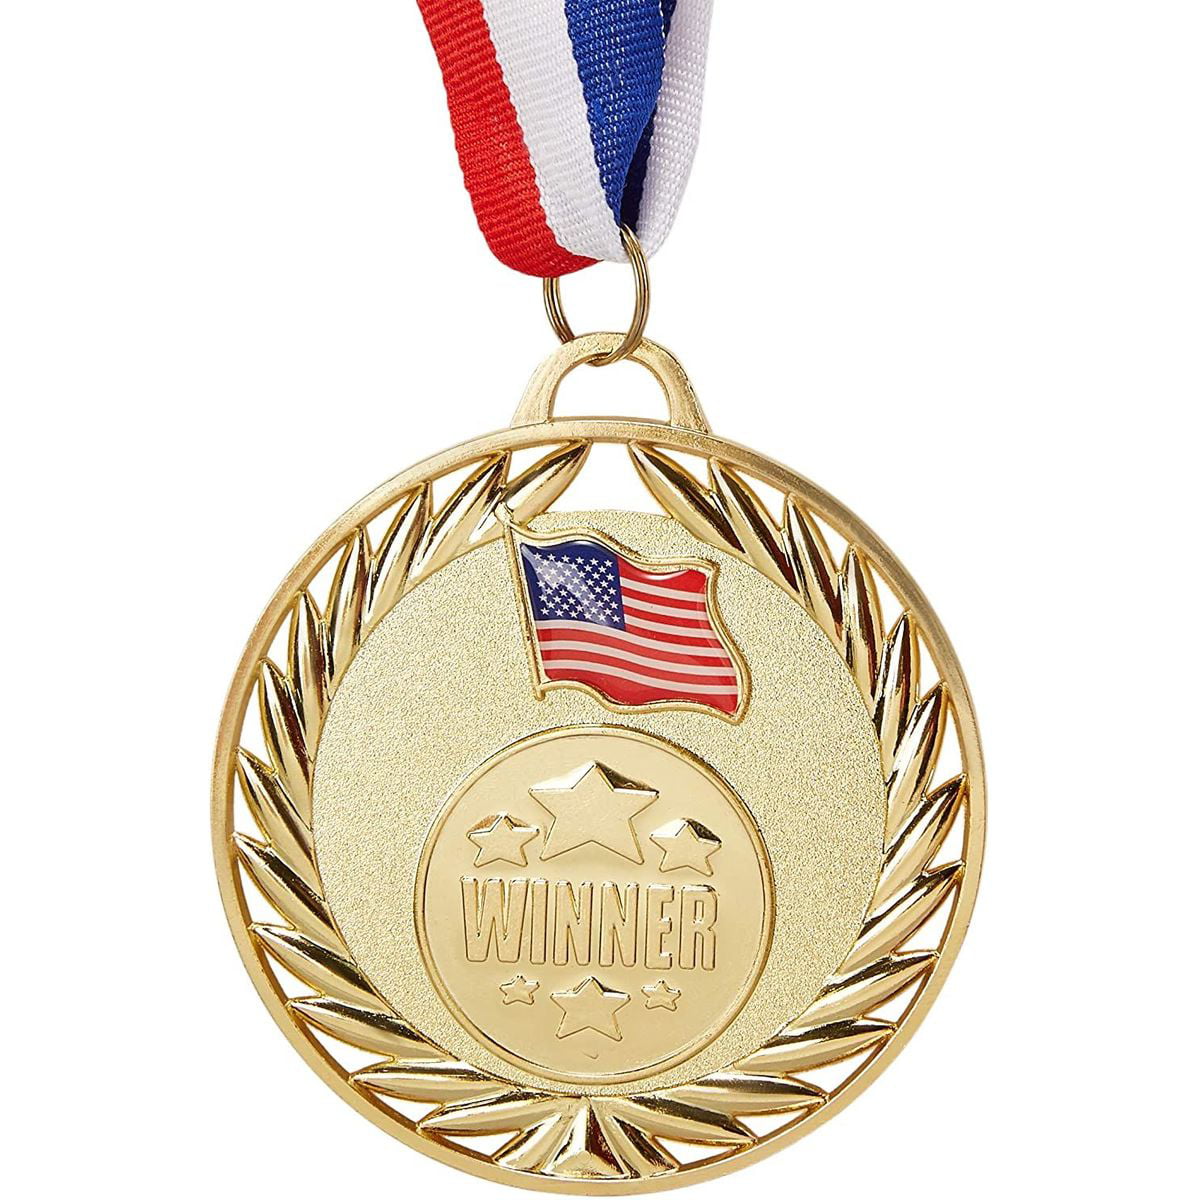 Personalised Engraved Prism Medal Great Player Team Award 